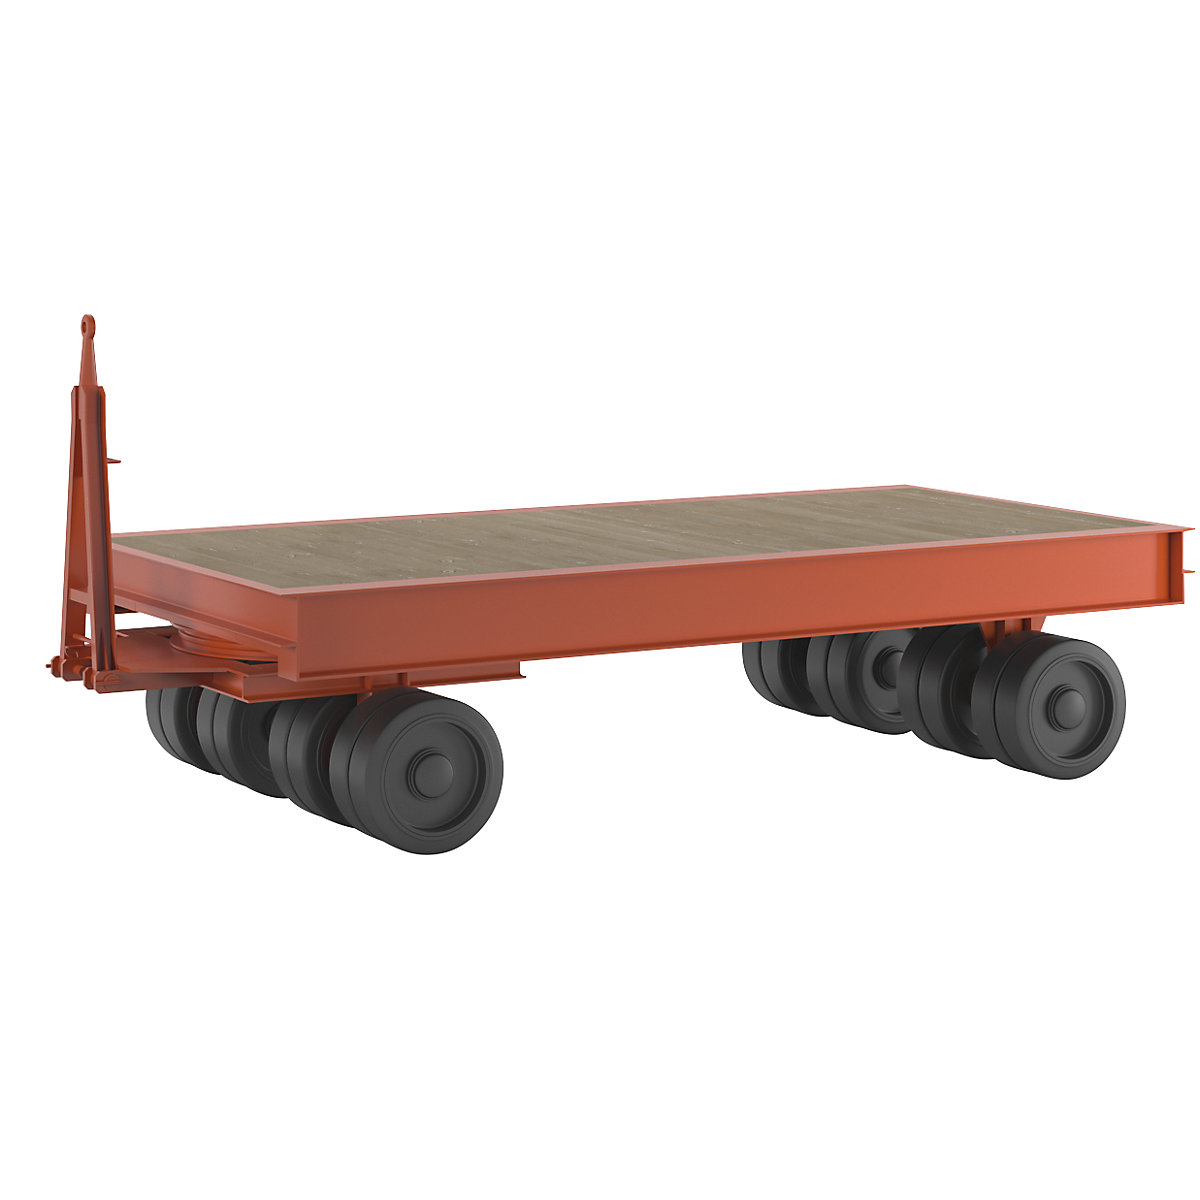 Heavy goods trailer, 40 t, turntable steering, platform 4.0 x 2.0 m-1